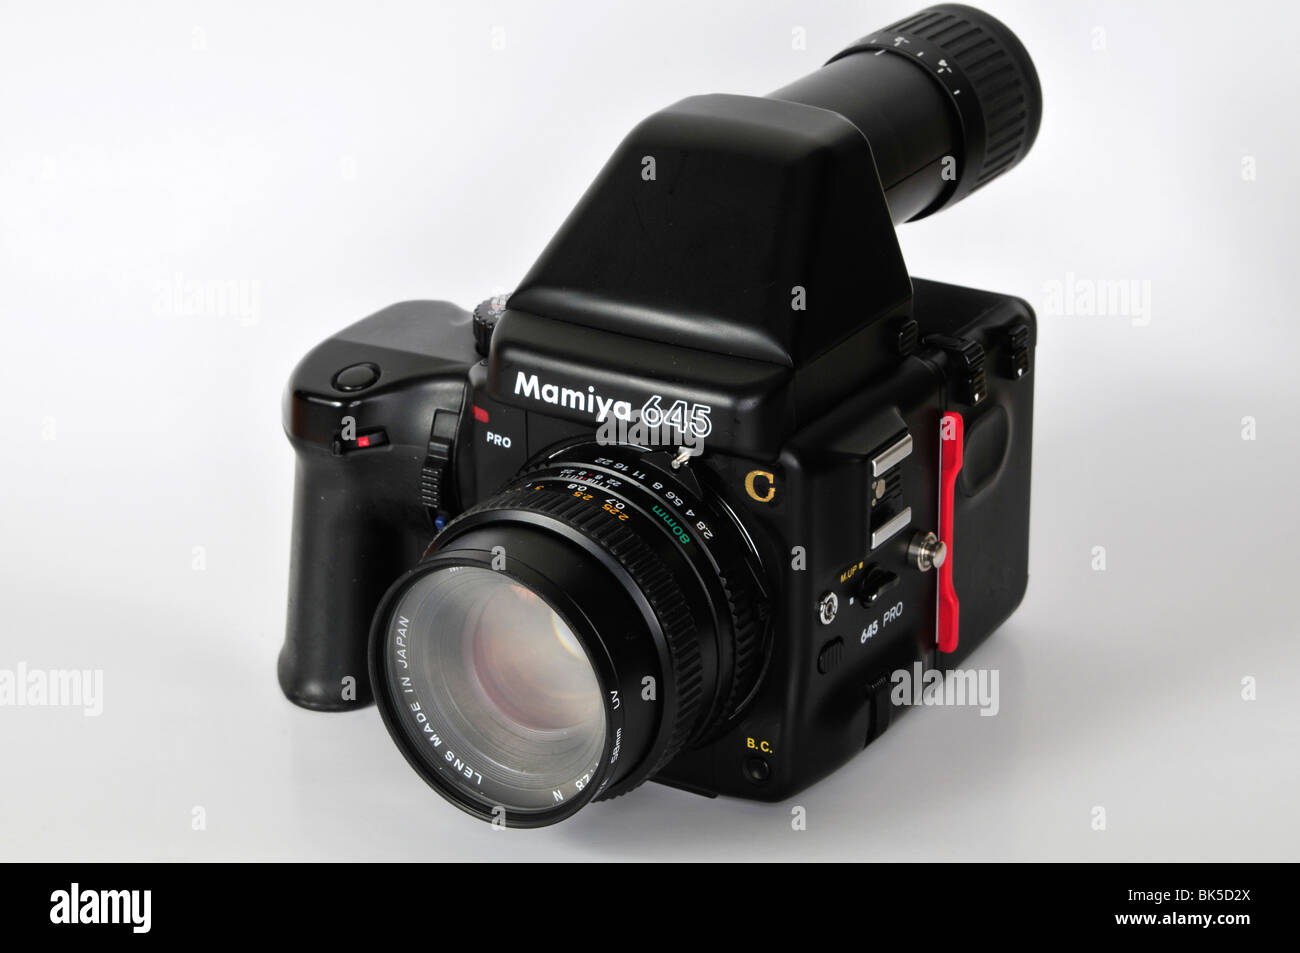 Mamiya 645 Pro camera body and lens Stock Photo